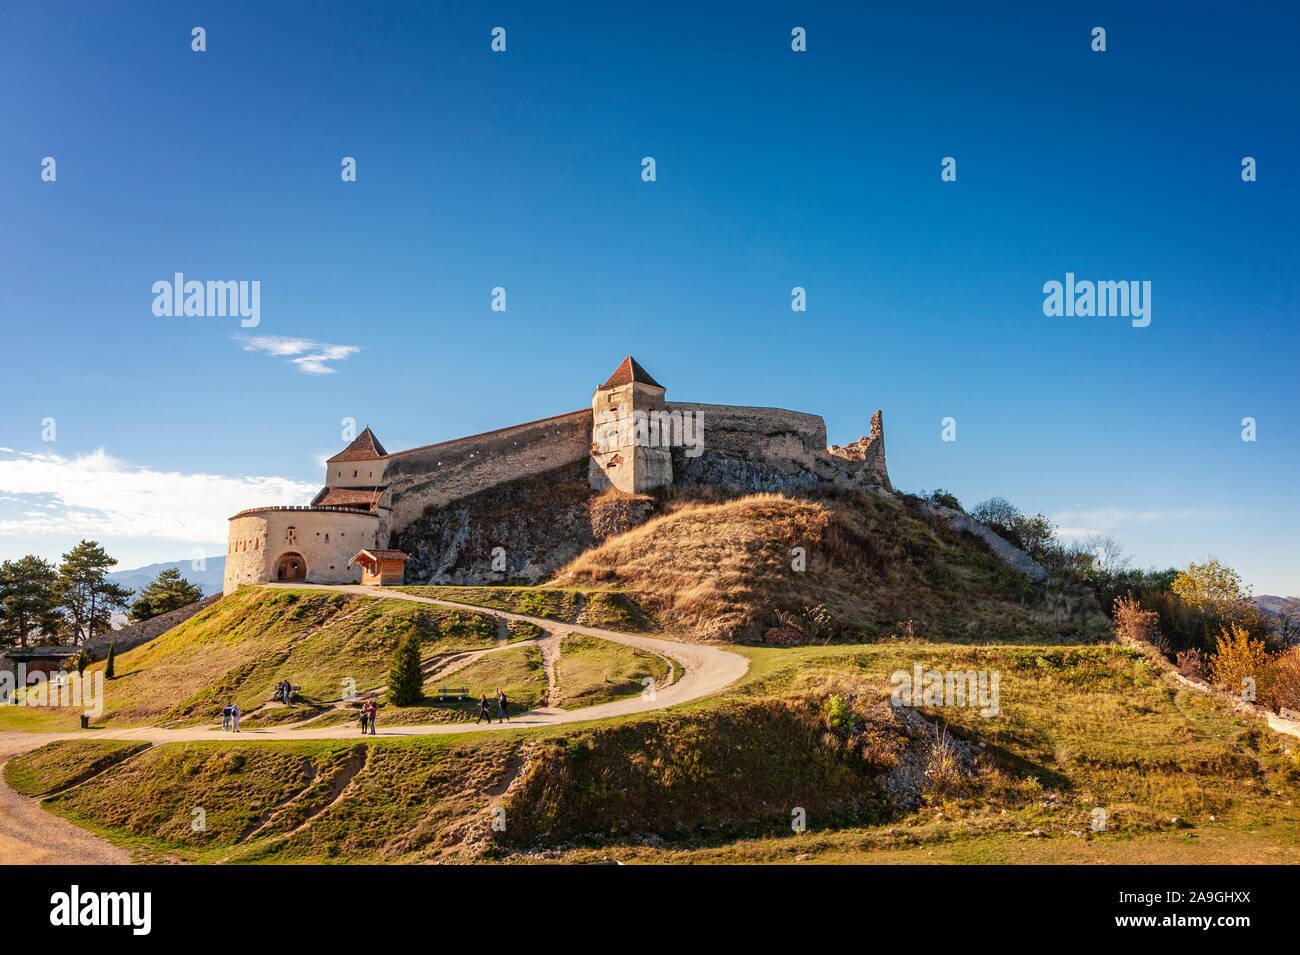 Rasnov Fortress, Râșnov Citadel, Brasov County, Carpathian Mountains, Transylvania, Romania. Historic Saxon monument / landmark. Stock Photo